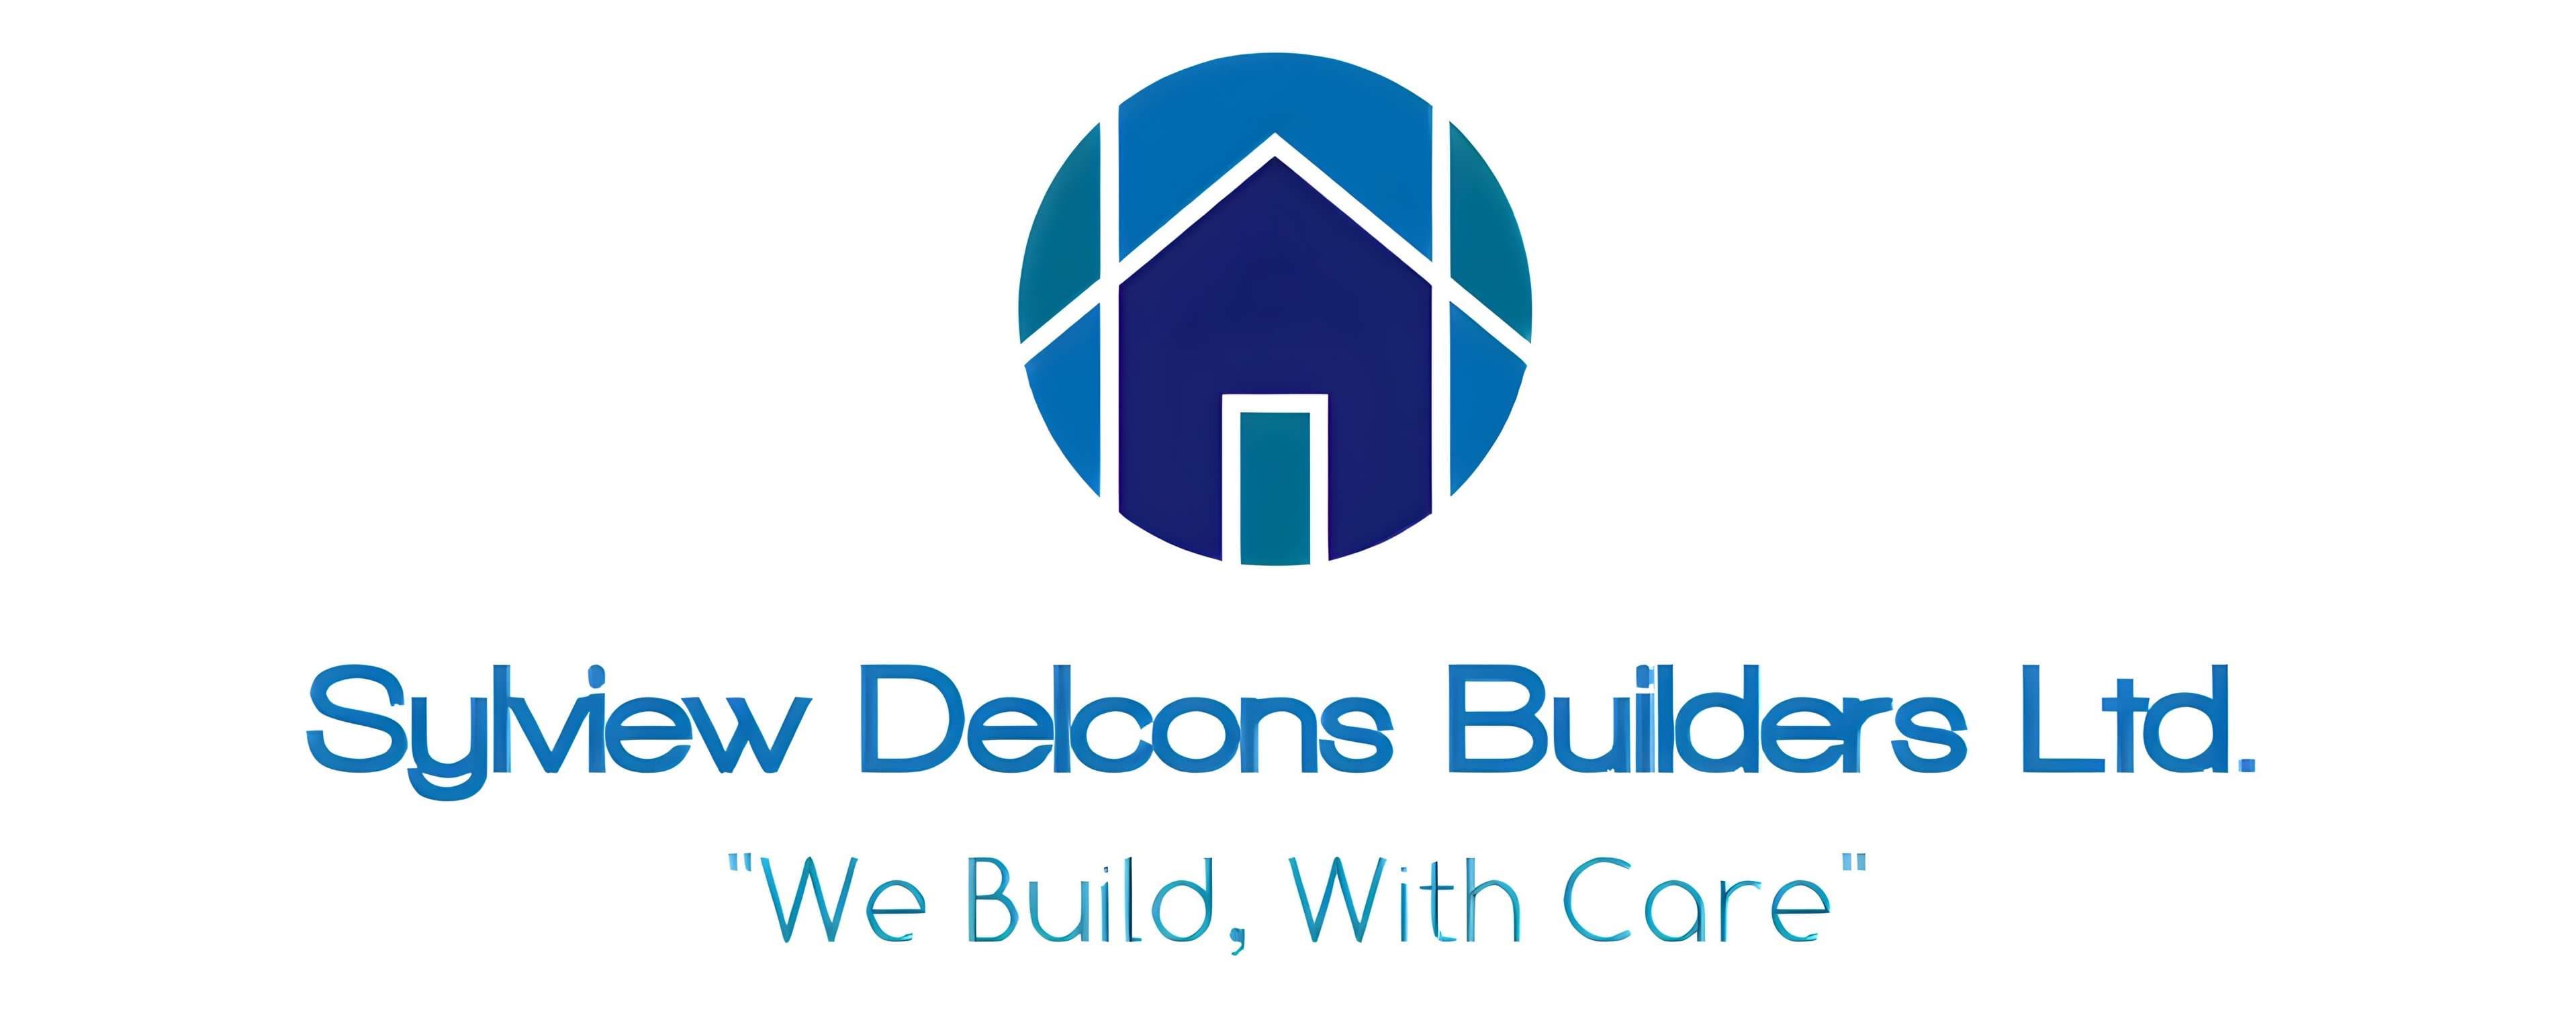 Sylview Delcons Builders Ltd